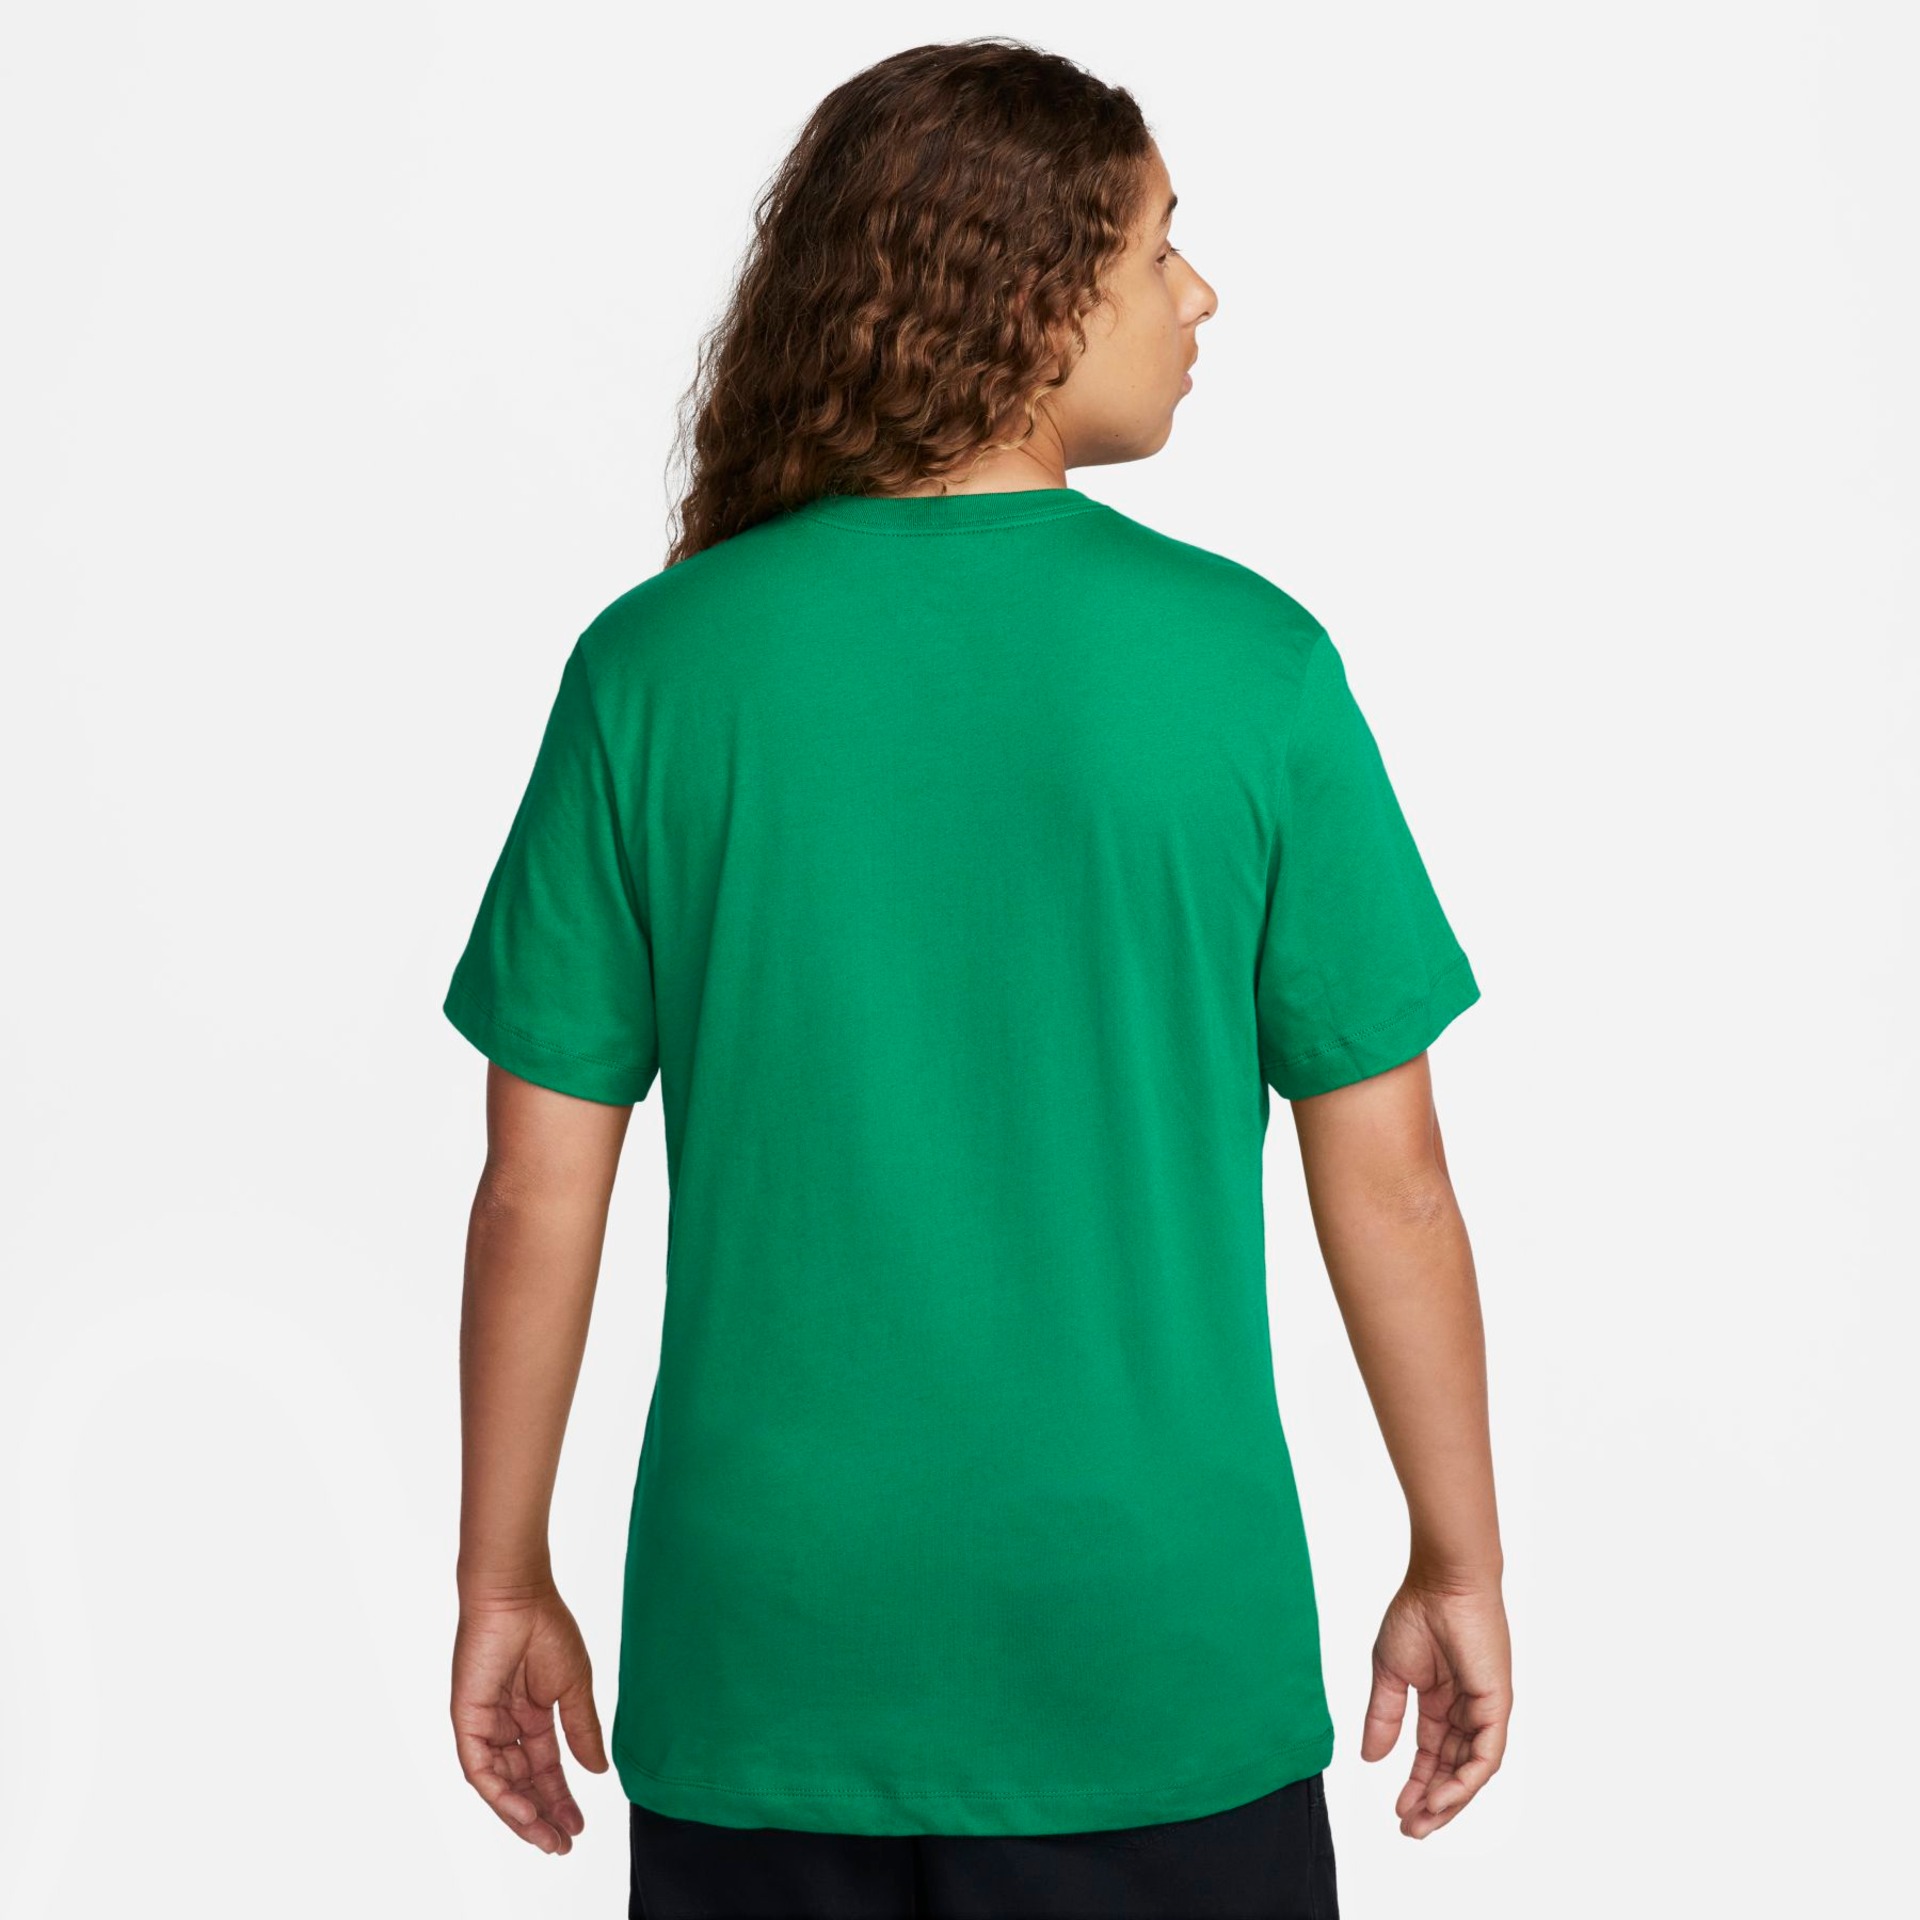 Camiseta Nike Sportswear Connect Masculina - Foto 2